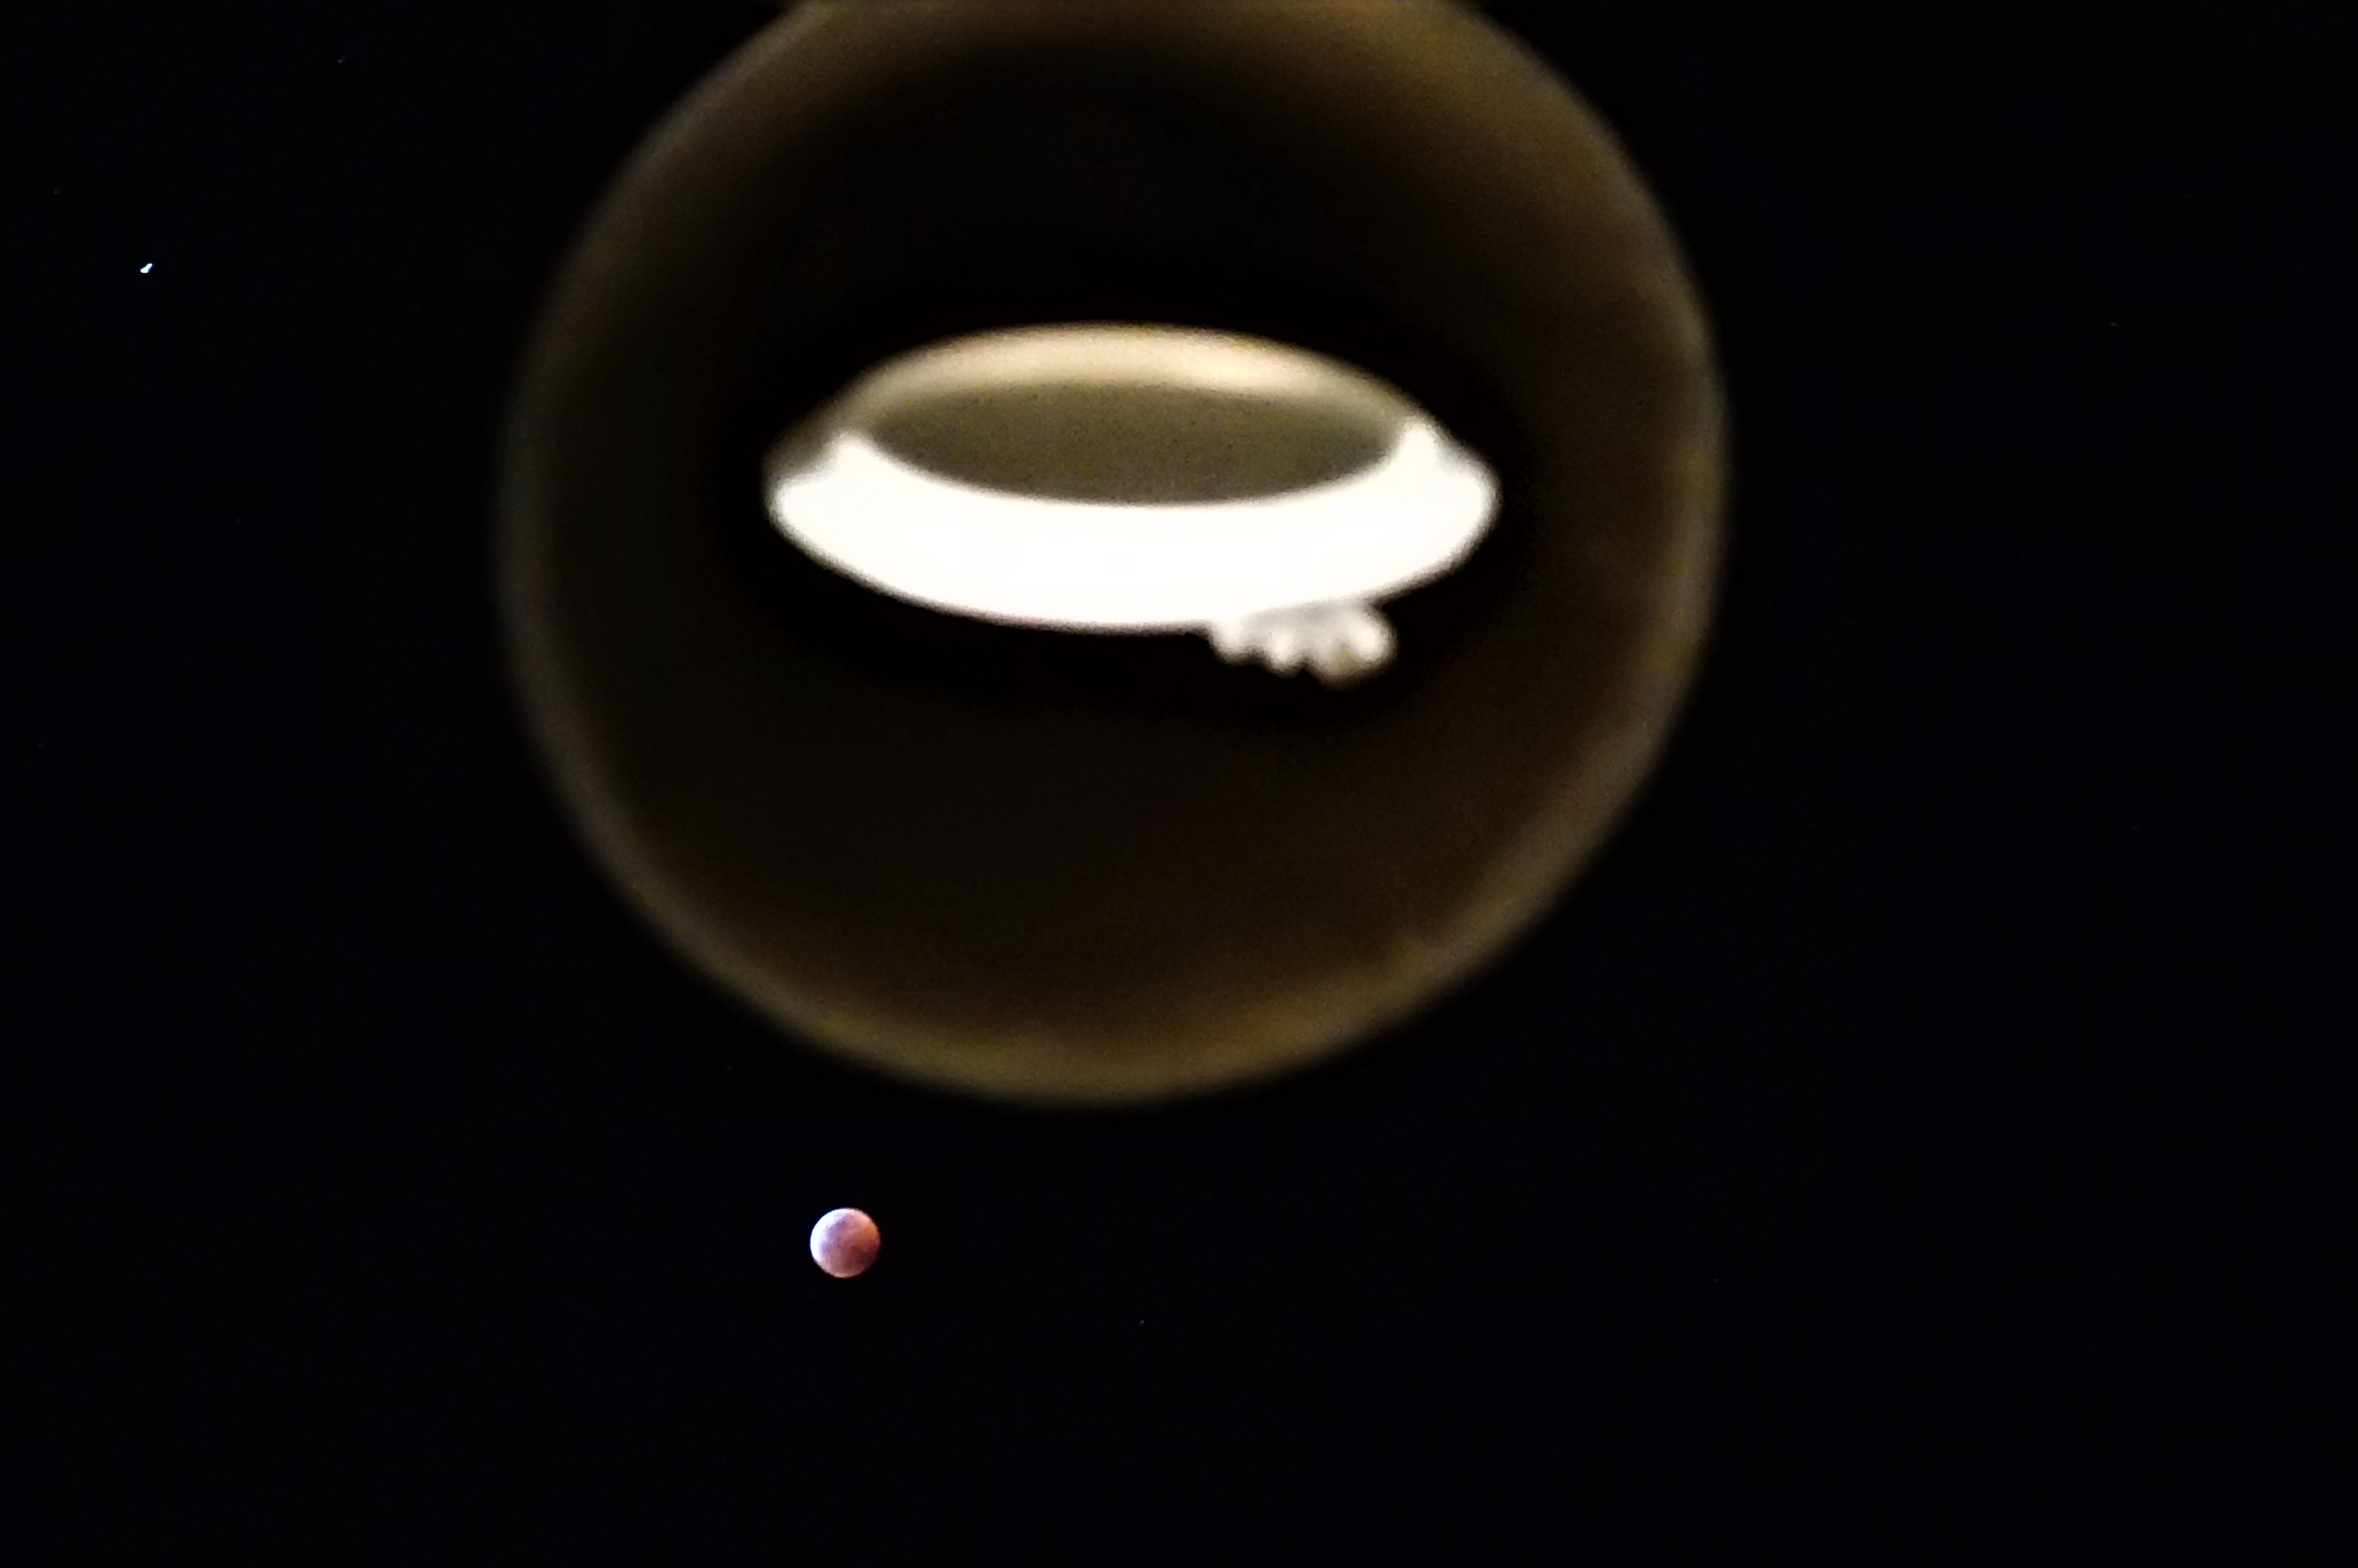 20-01-2019: Unusual UFO Capture During Blood Red Moon, San Antonio, Texas, U.S.